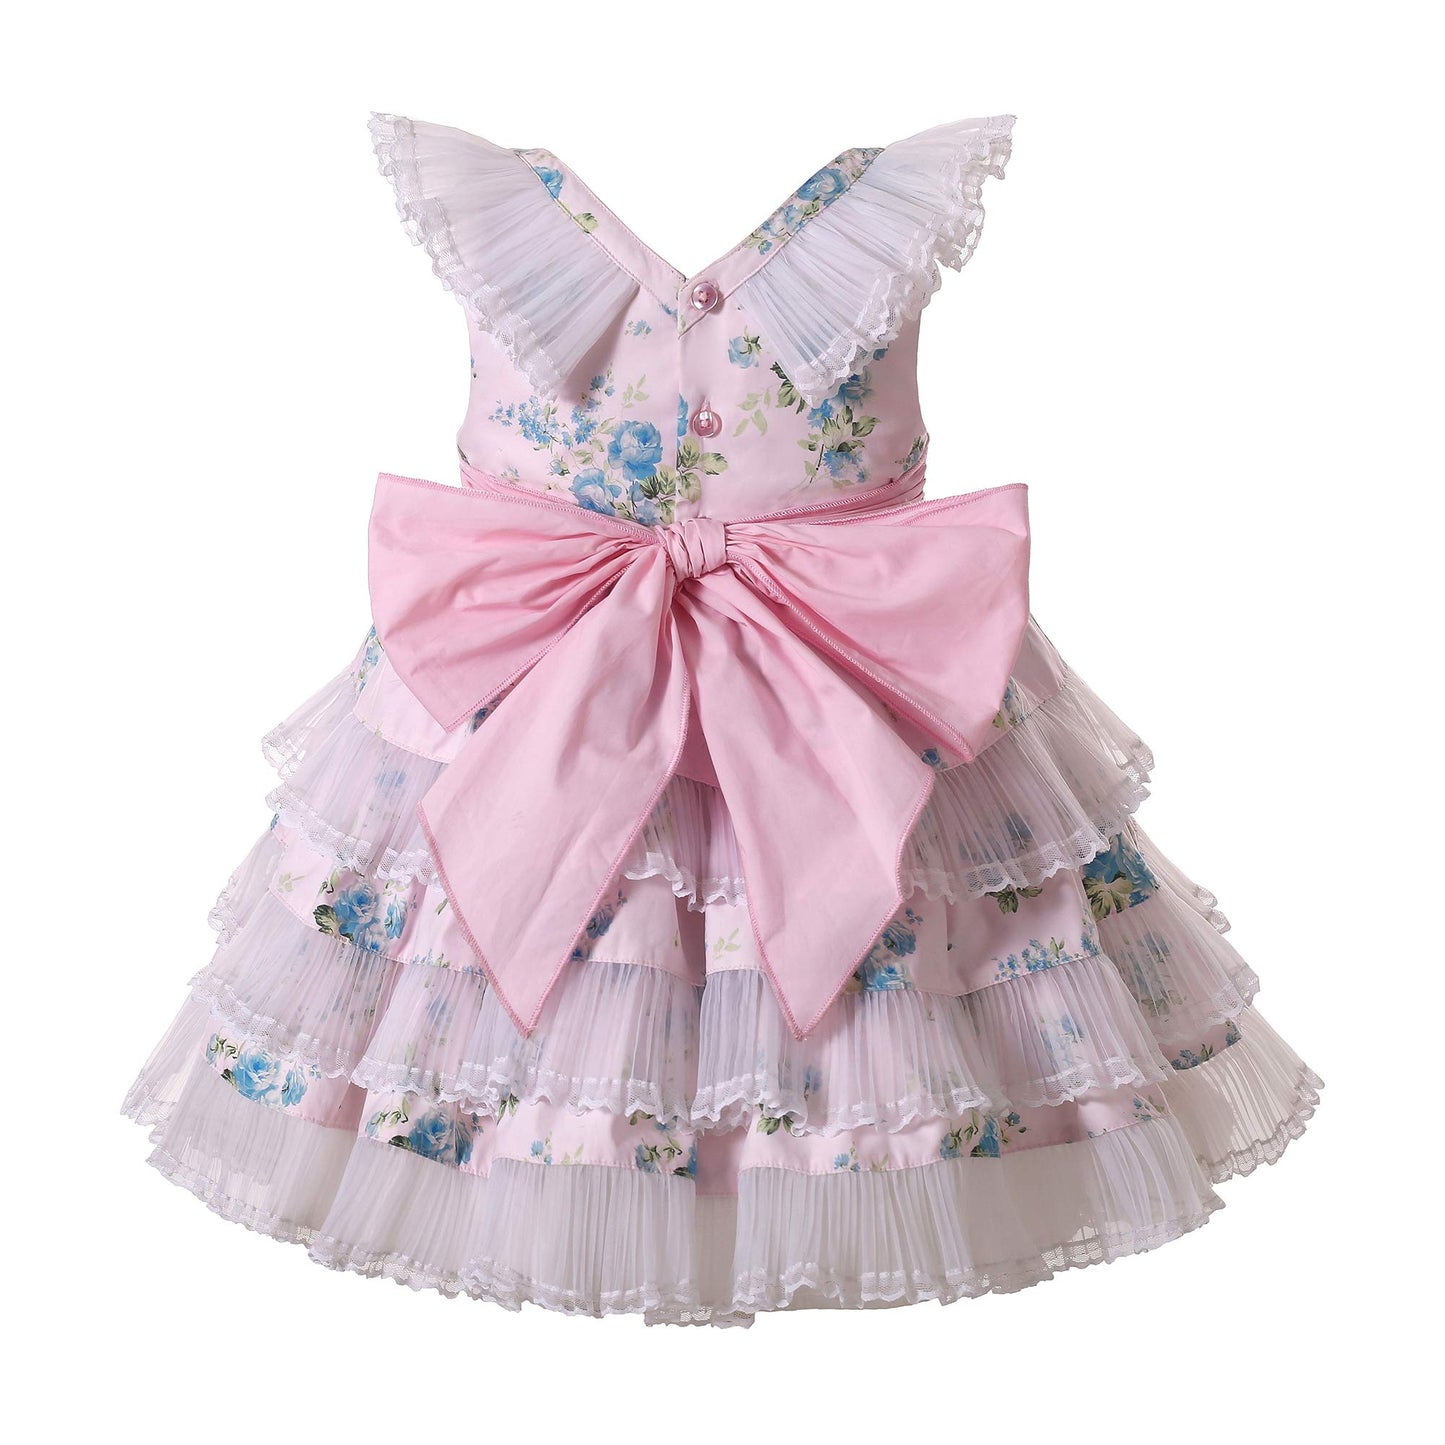 Ju petitpop Girls Summer Lovely Pink Floral Ruffle Outfits Sleeveless Tutu Kids Sundress Age 3-12 Years with Headpiece